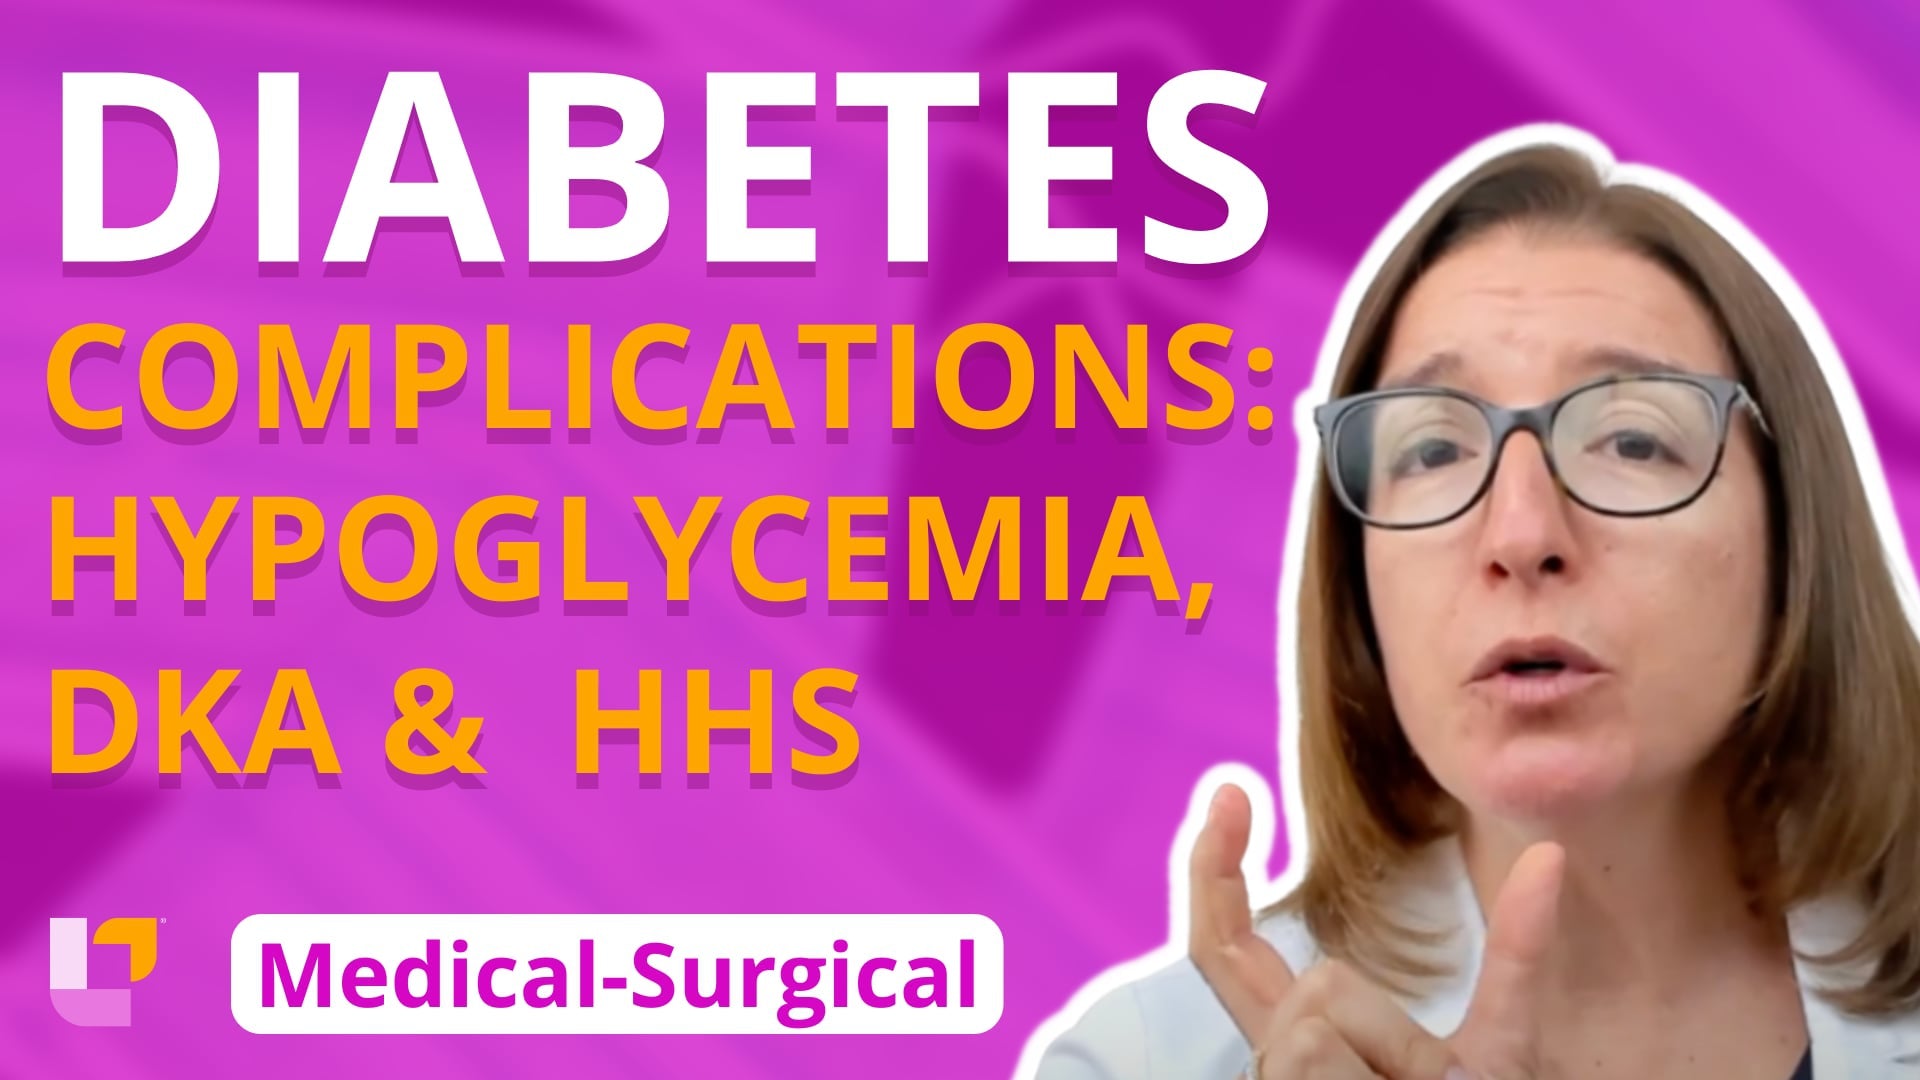 Med-Surg Endocrine System, part 19: Diabetes Complications - Hypoglycemia, DKA, HHS - LevelUpRN